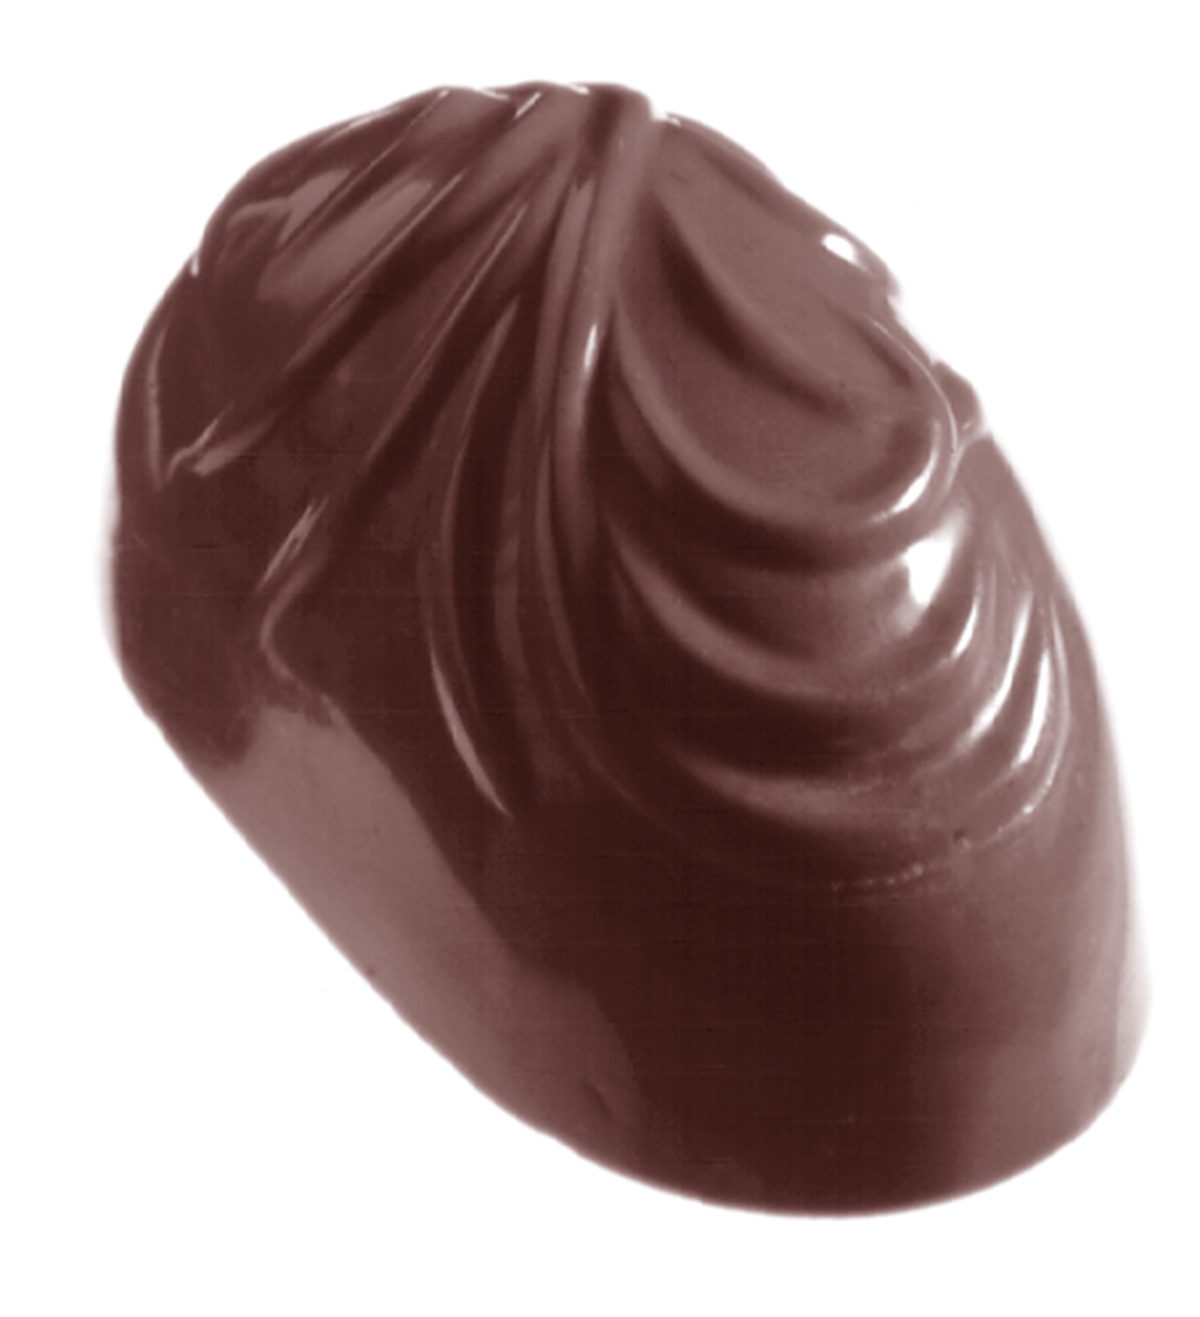 Se Professionel chokoladeform i polycarbonat - Feather CW1222 hos BageTid.dk